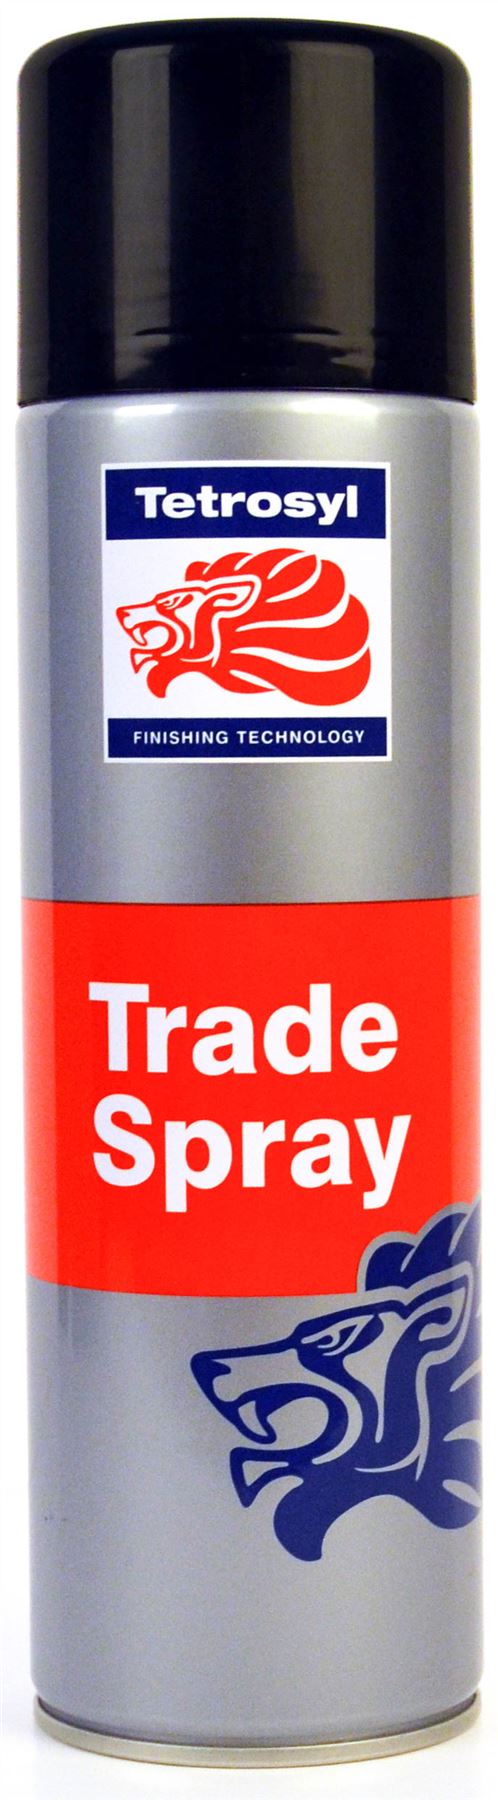 Tetrosyl Trade Spray Paint Satin Black 500ml